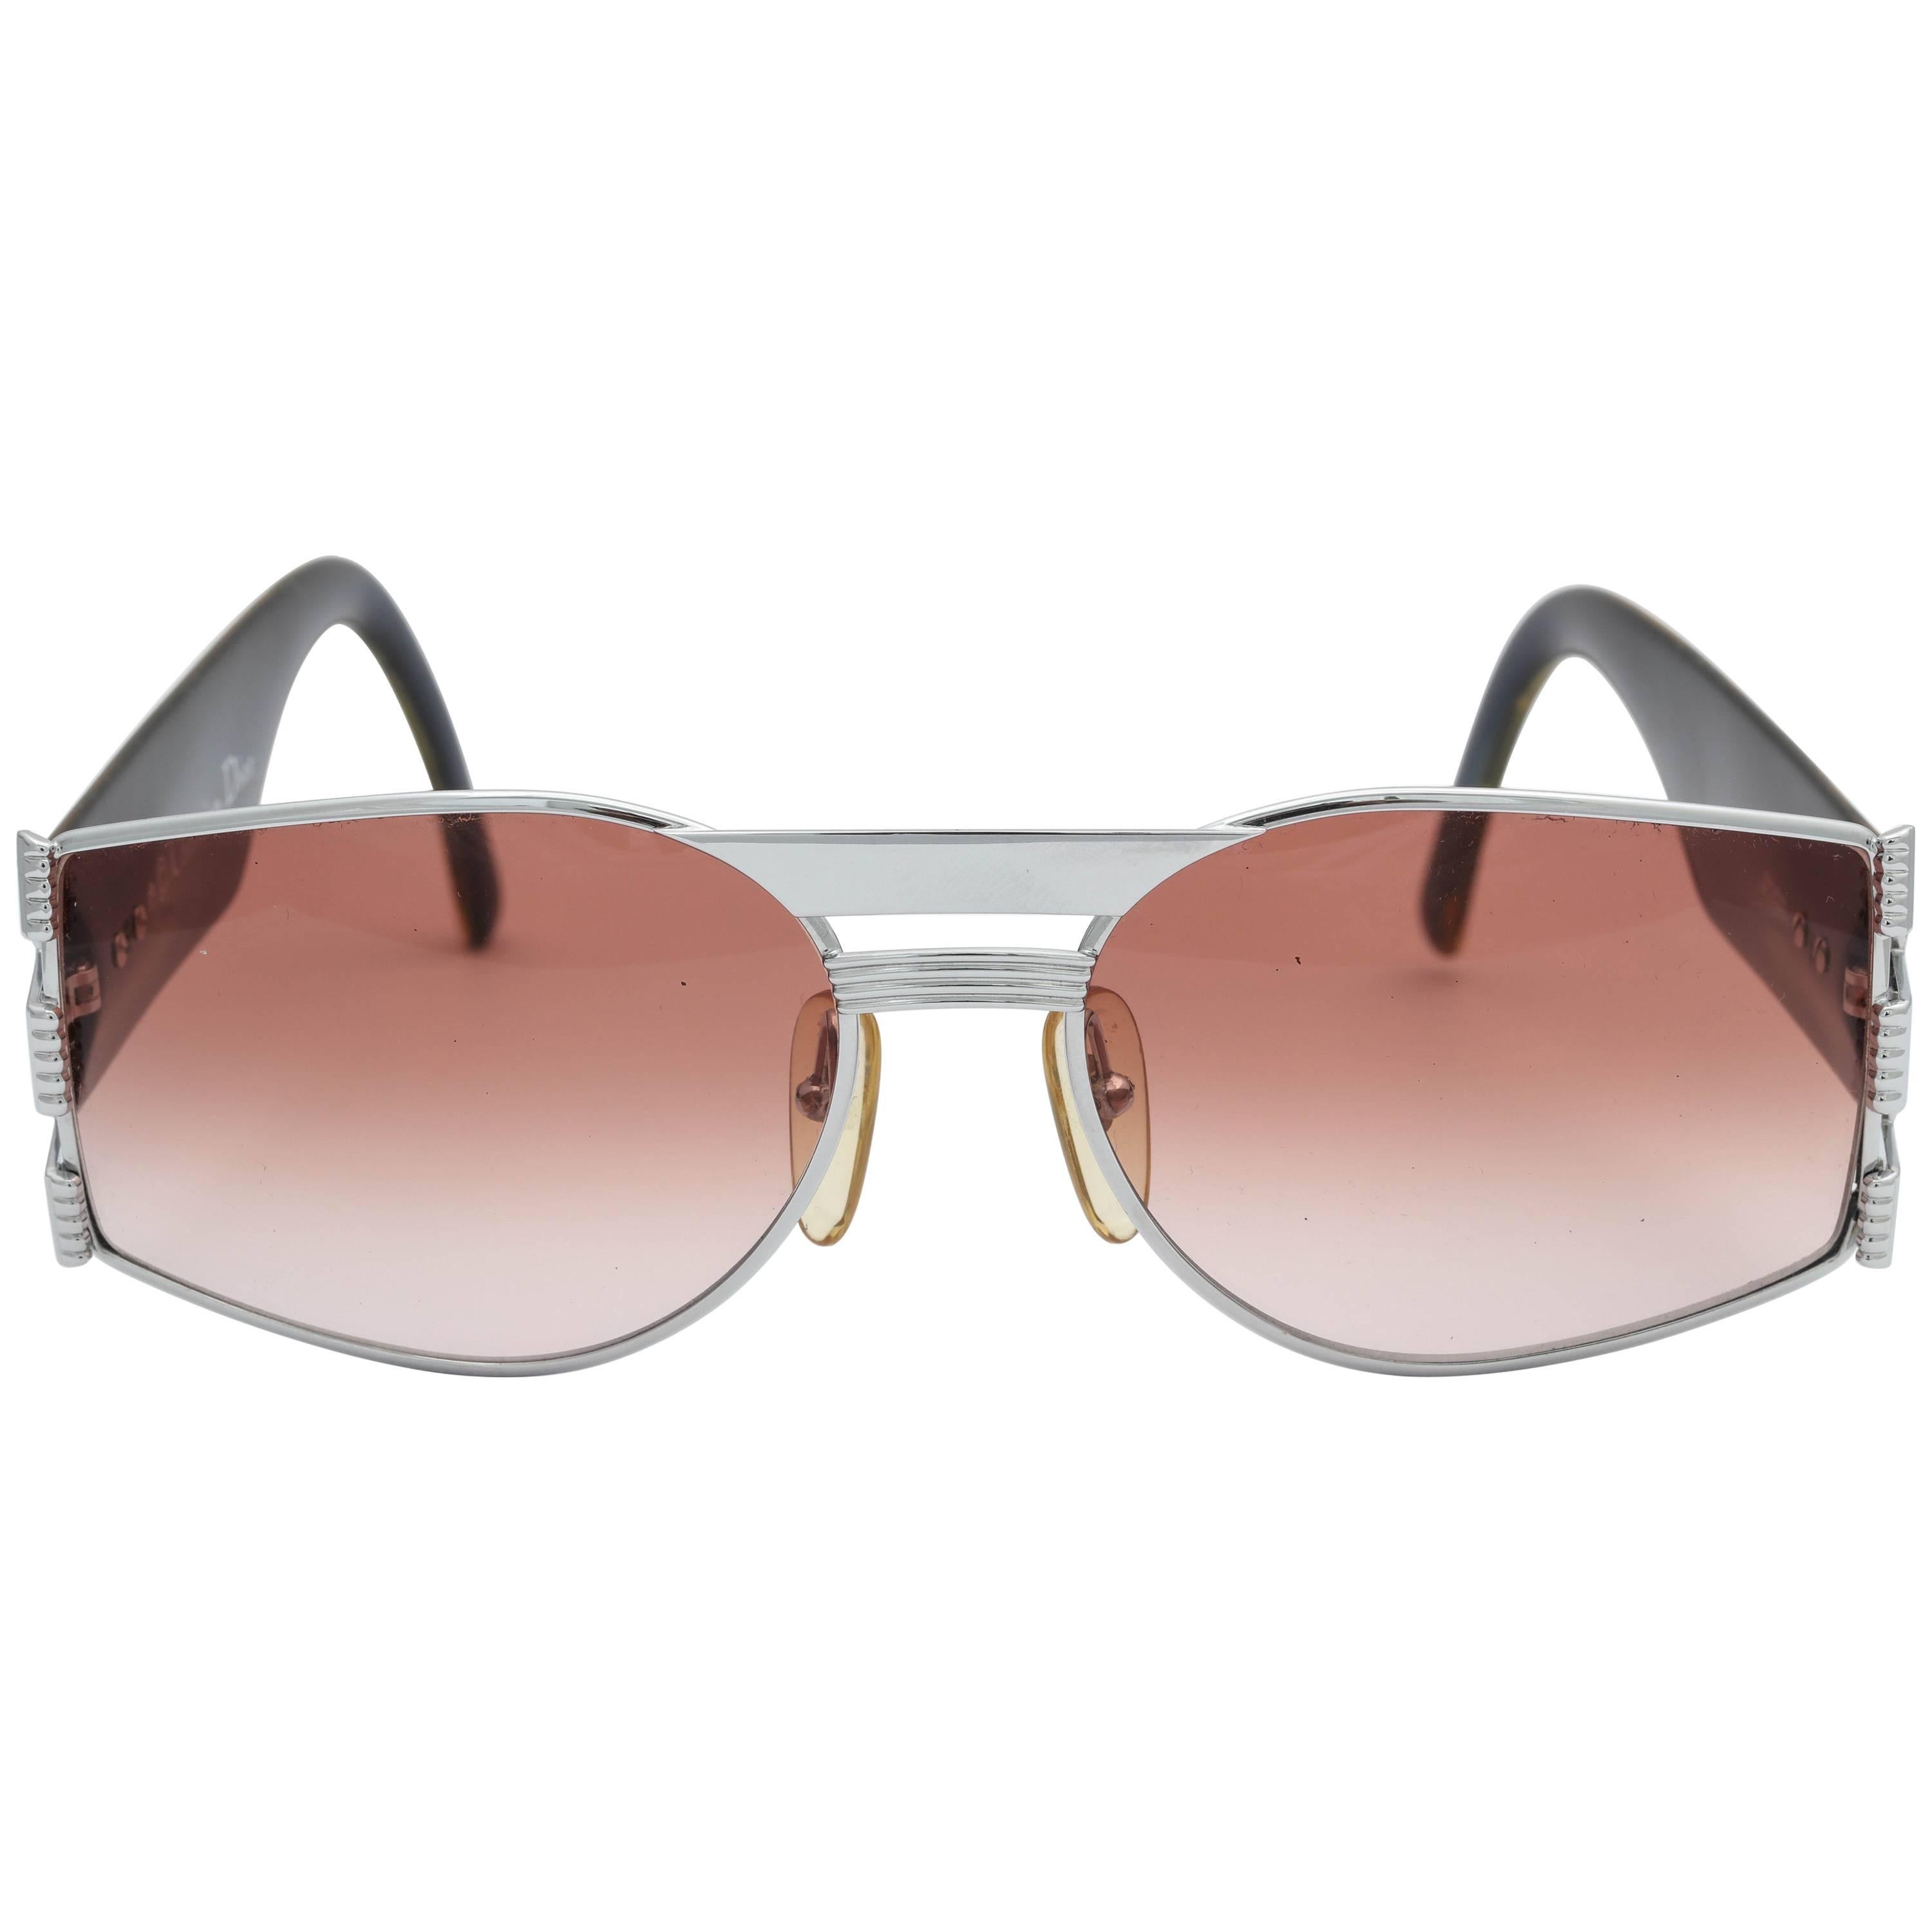 Vintage Christian Dior Sunglasses 2562